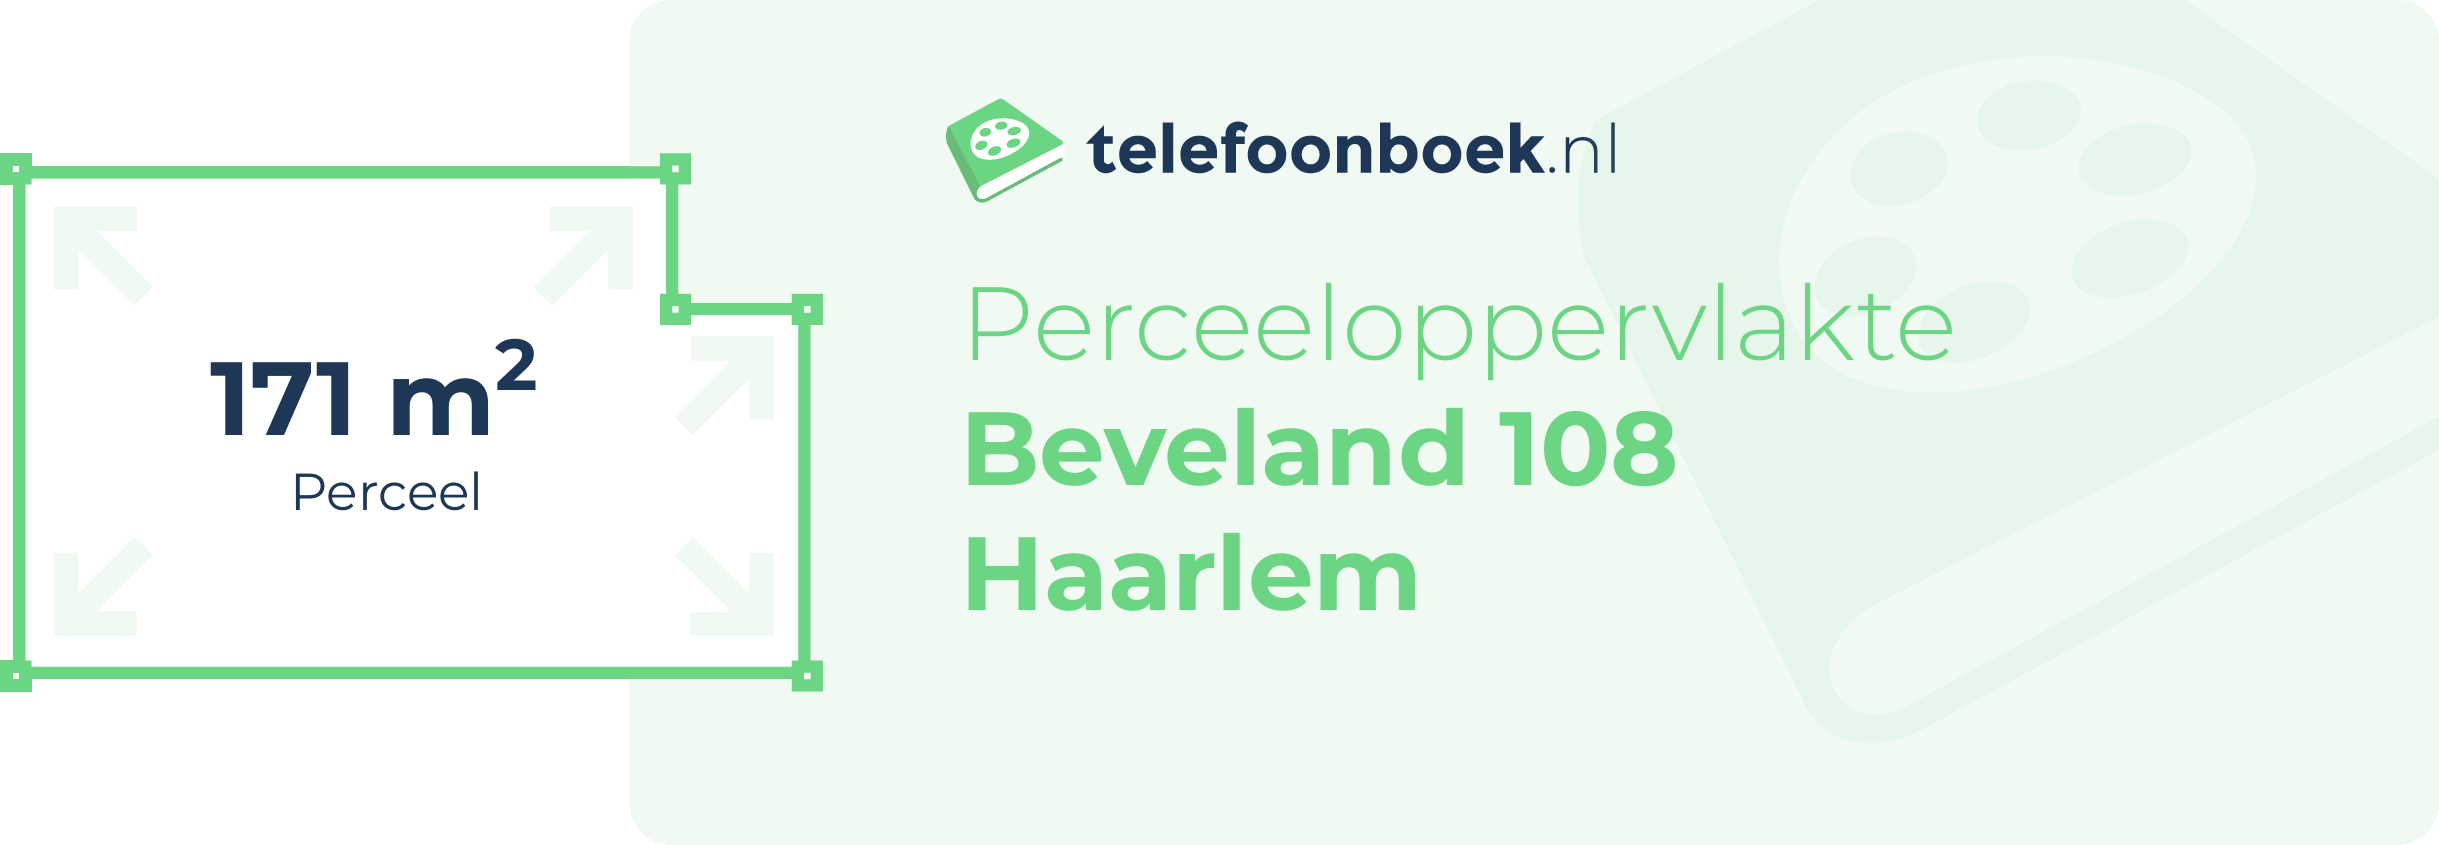 Perceeloppervlakte Beveland 108 Haarlem